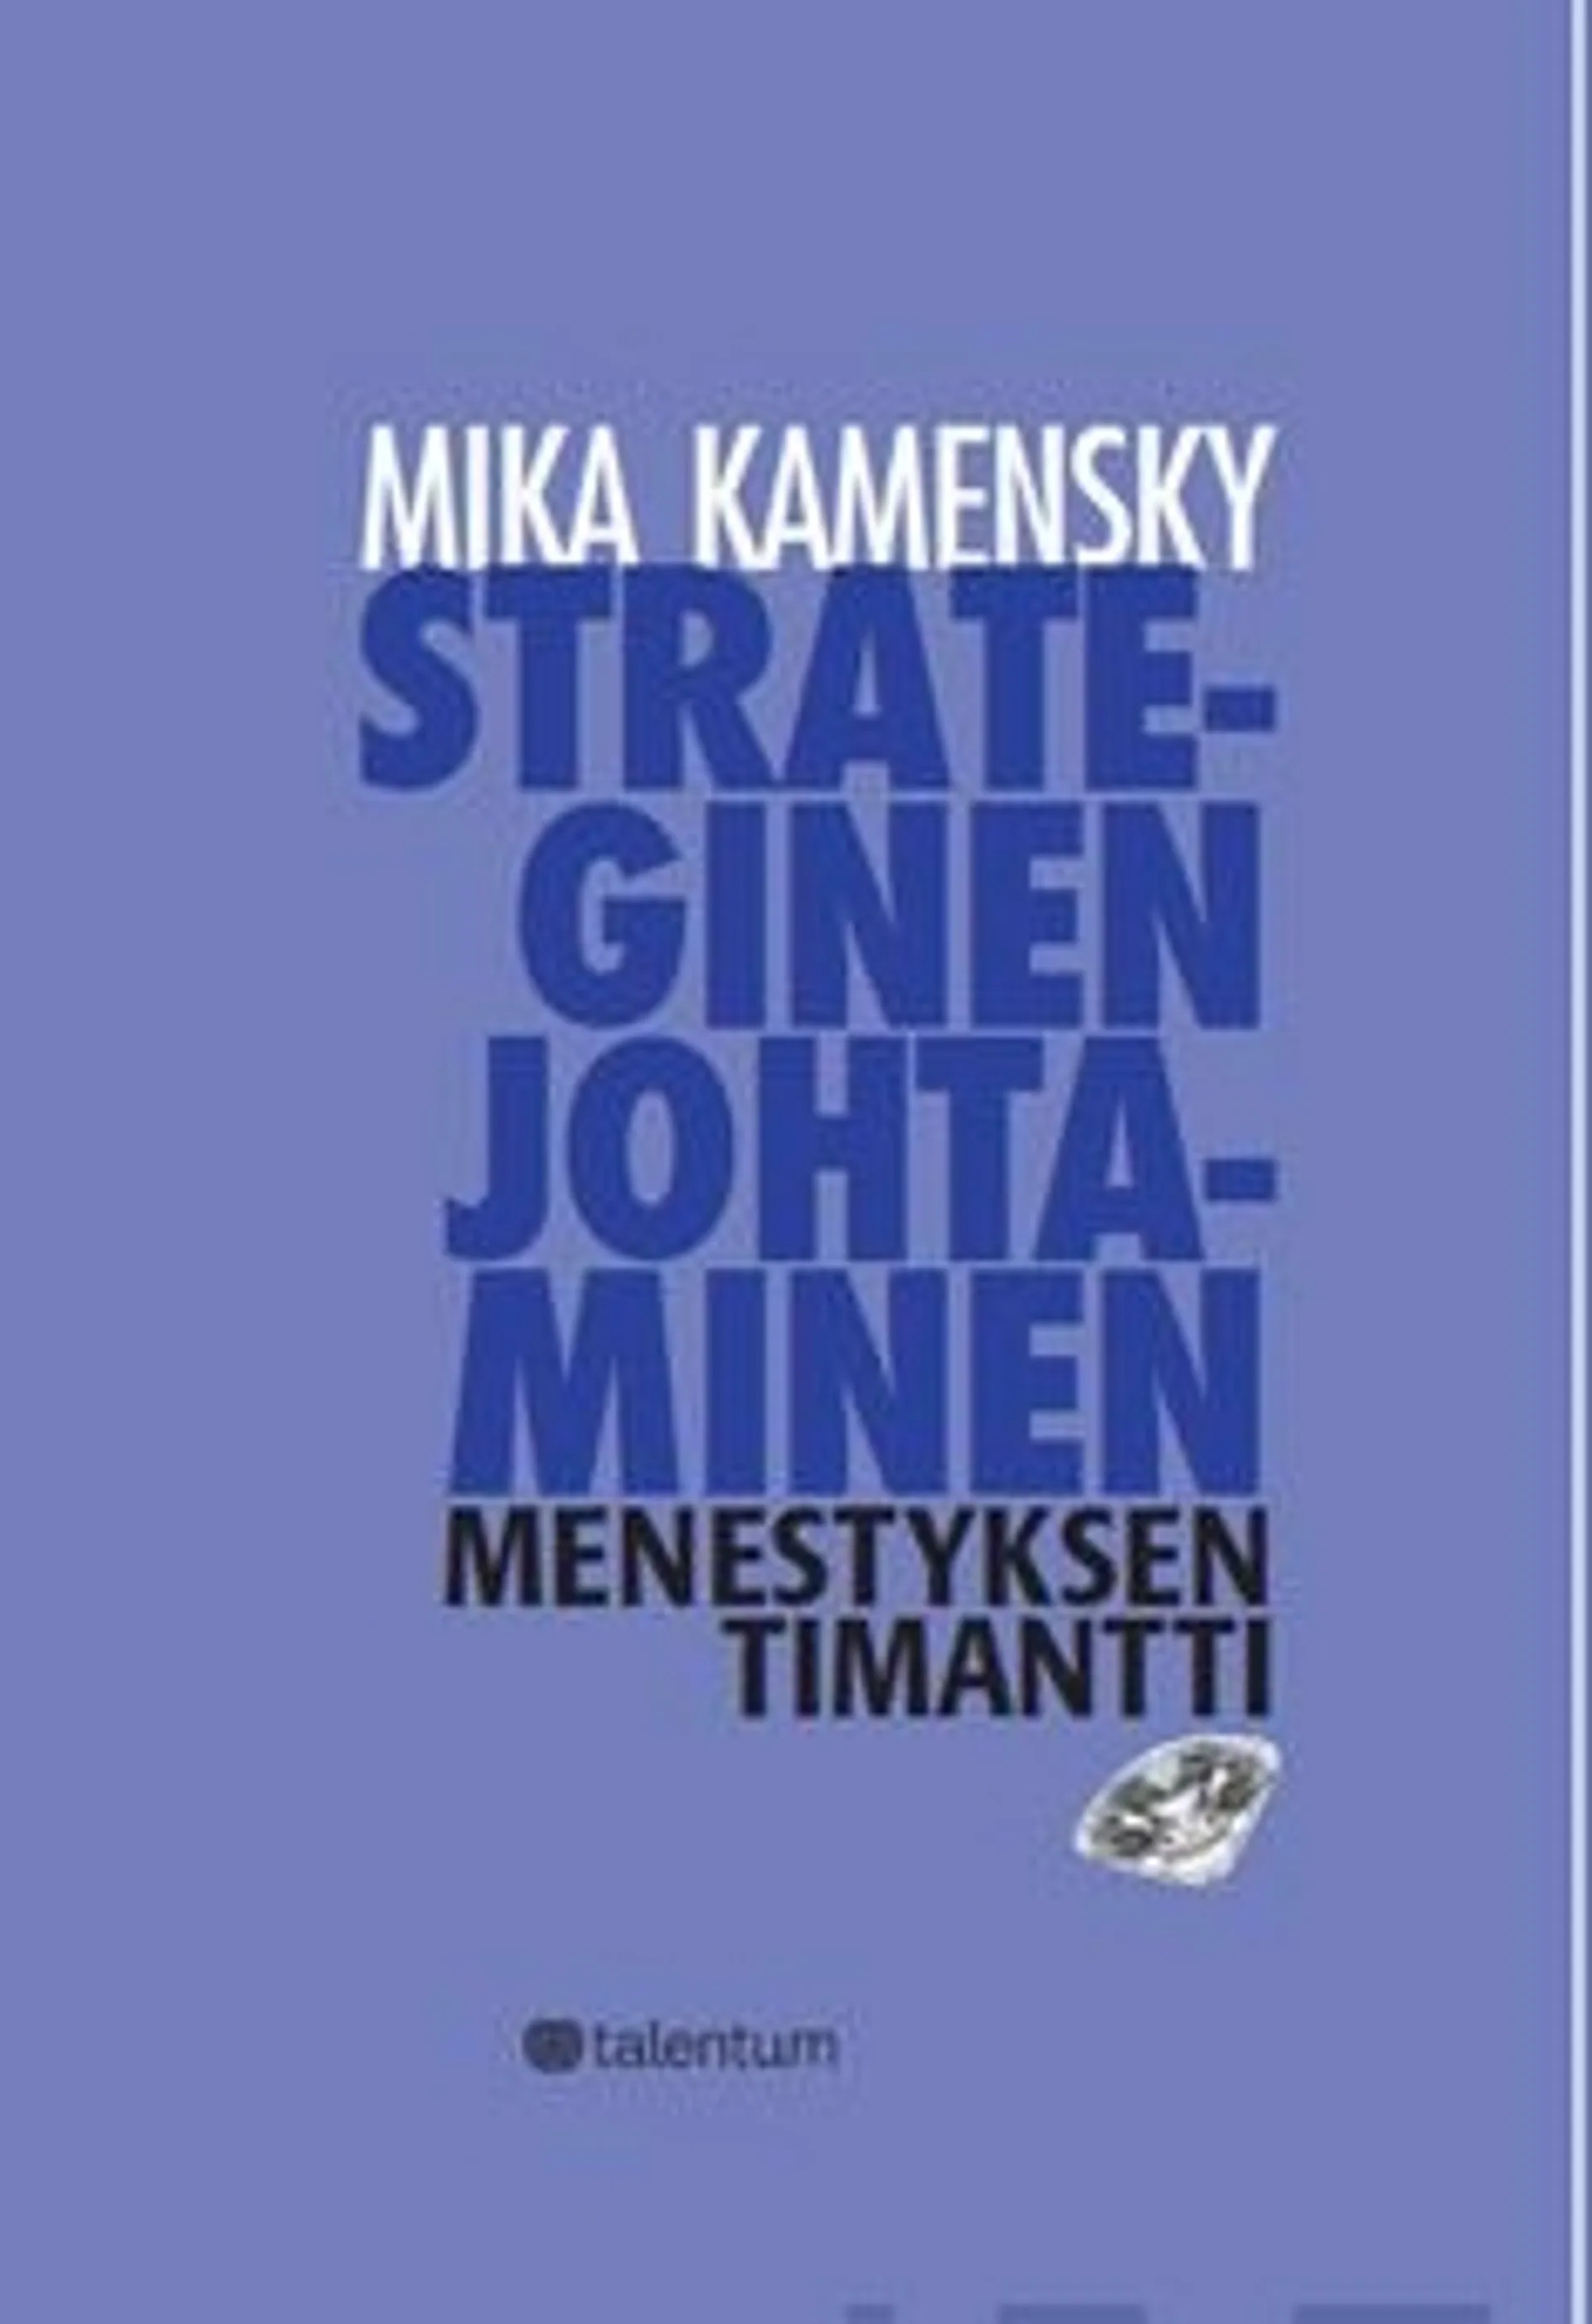 Kamensky, Strateginen johtaminen